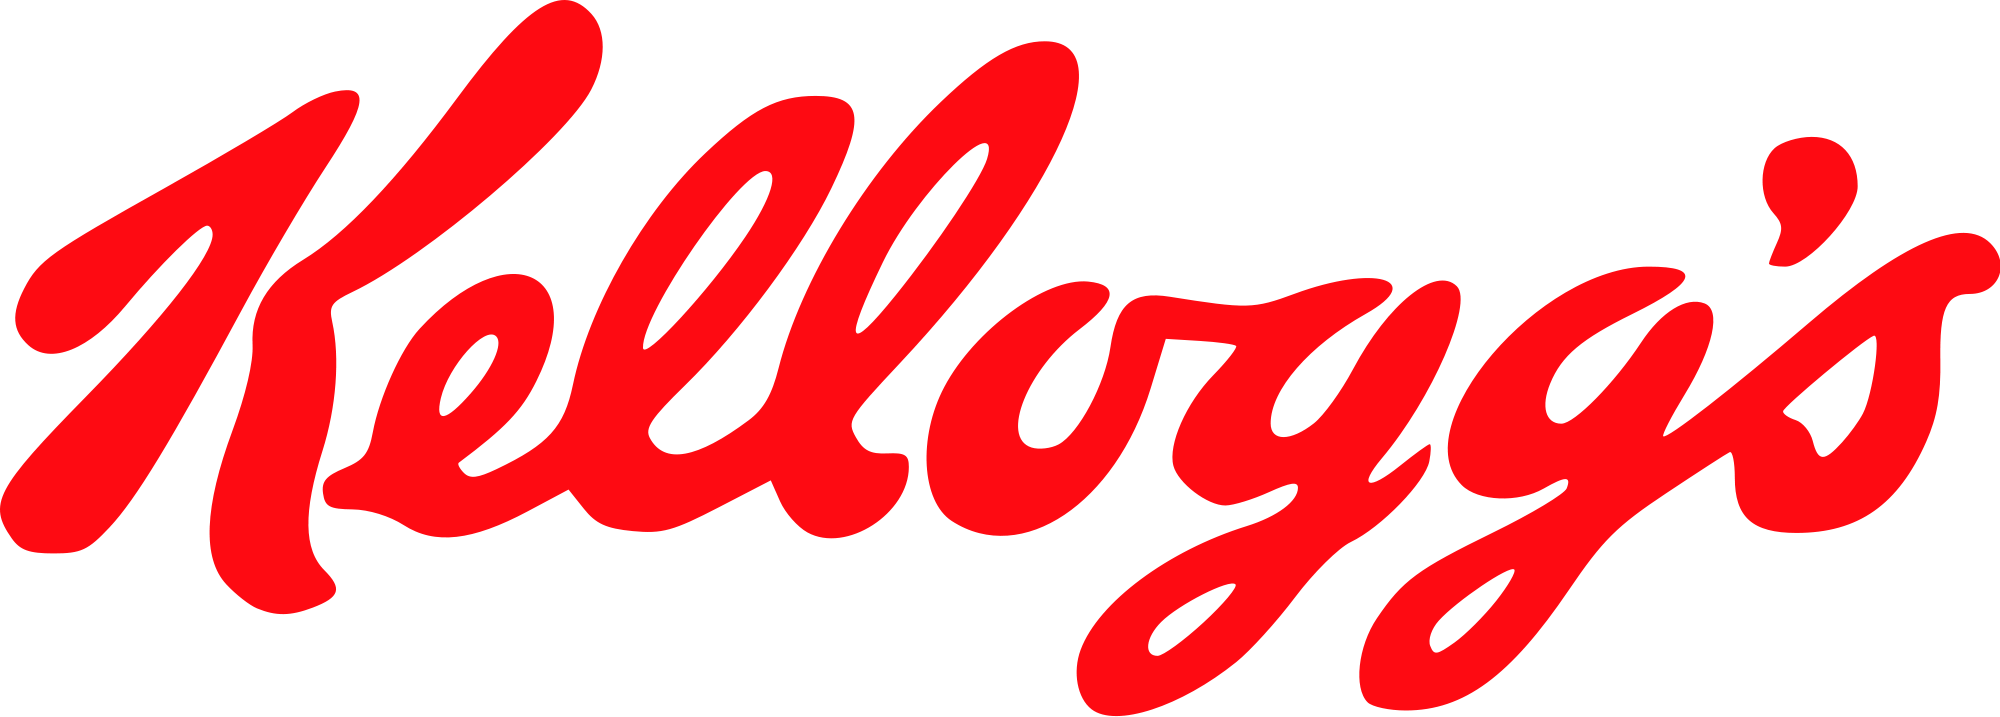 KELLOGG'S-logo